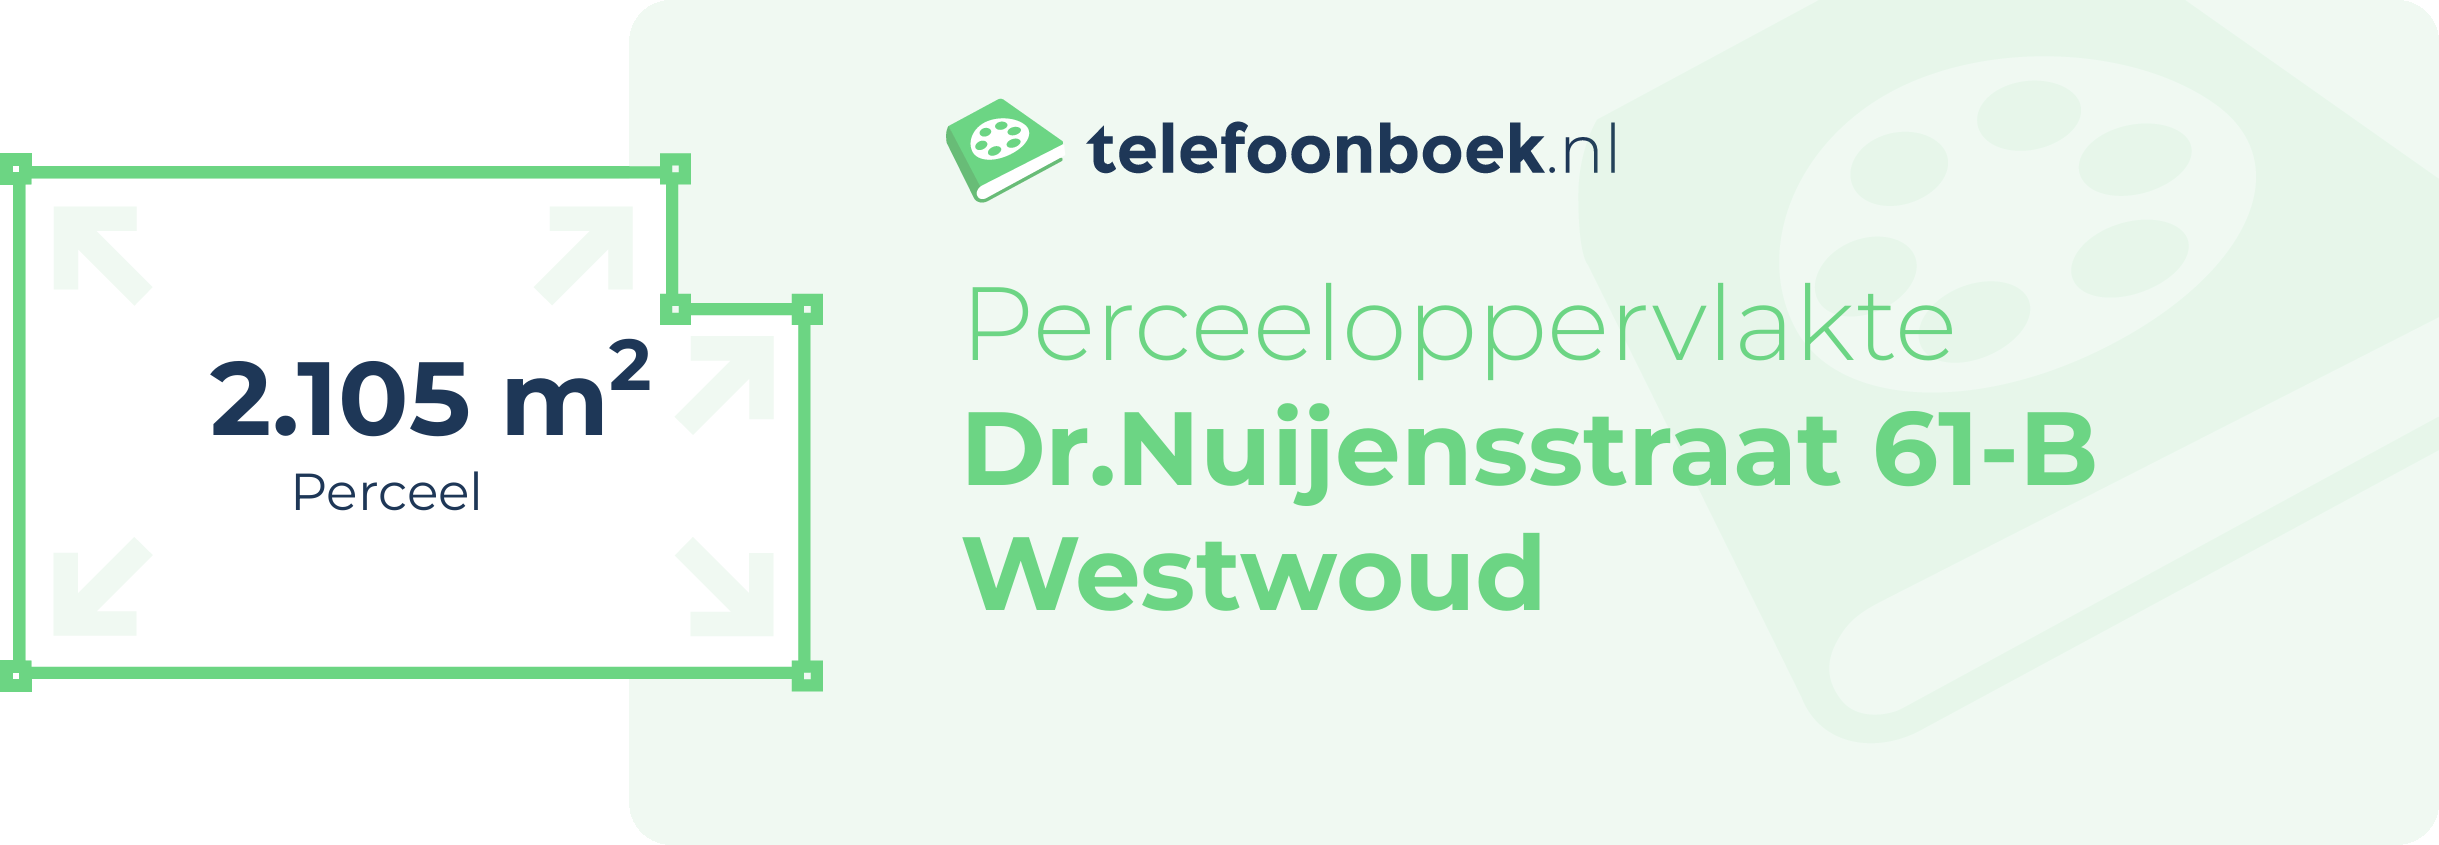 Perceeloppervlakte Dr.Nuijensstraat 61-B Westwoud